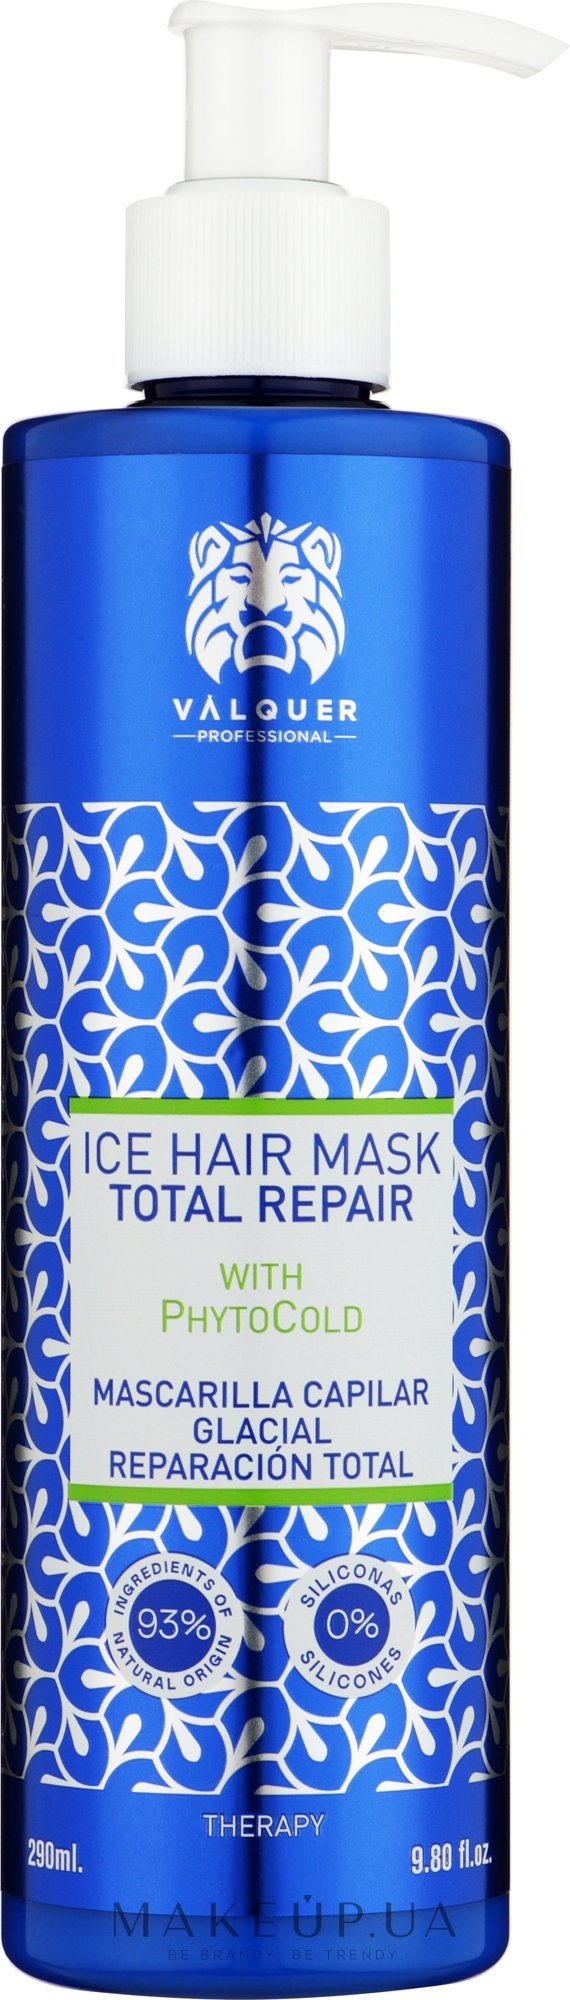 Восстанавливающая маска для волос - Valquer Ice Hair Mask Total Repair  — фото 290ml